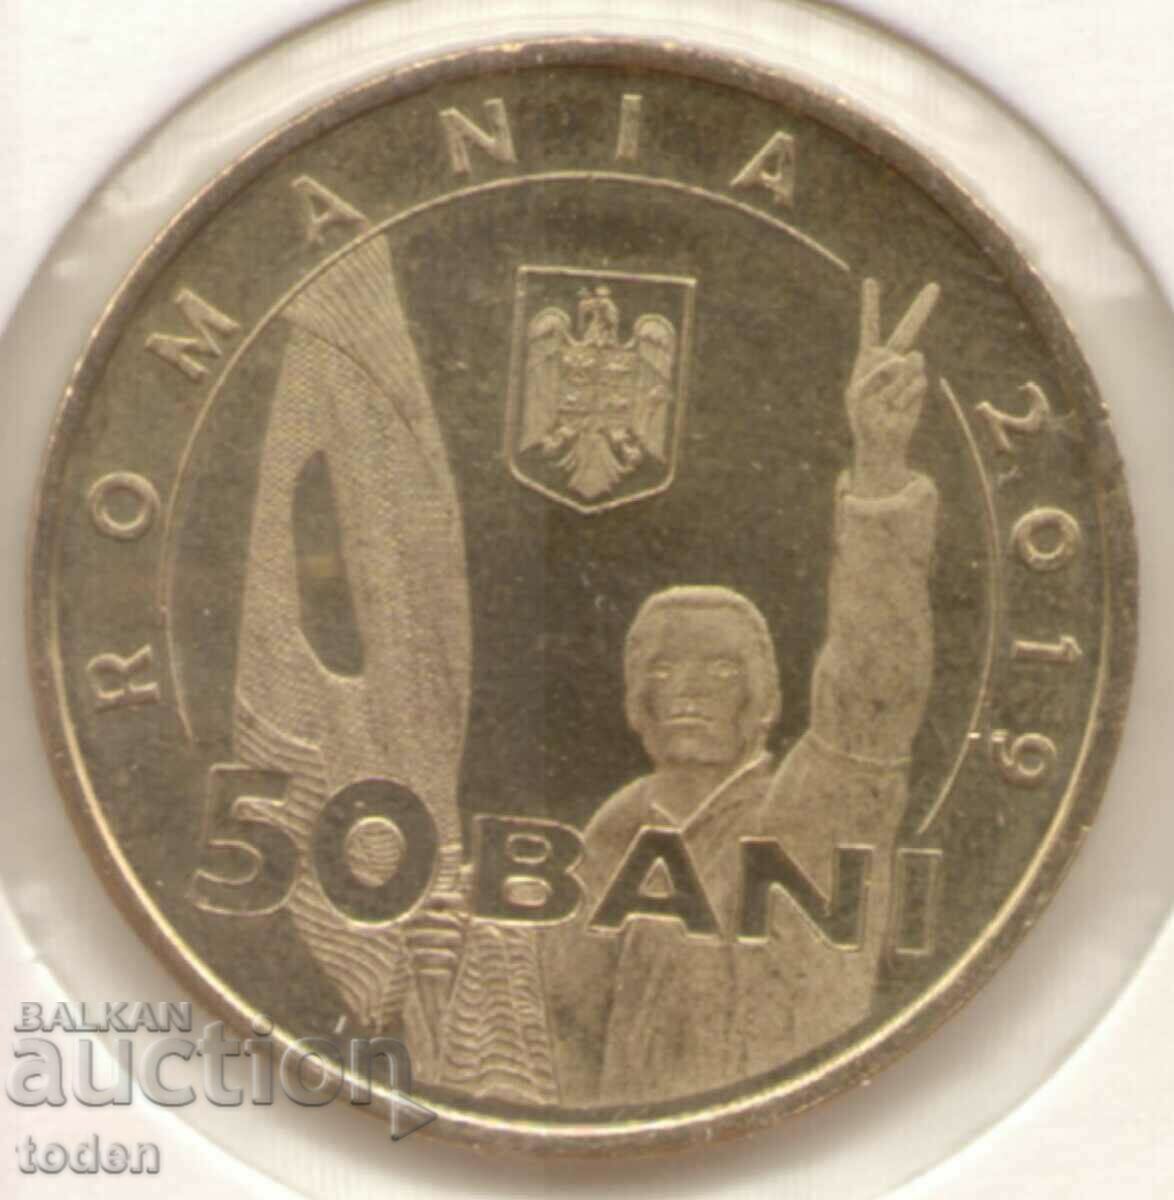 Romania-50 Bani-2019-KM# 445-Revolution of December 1989